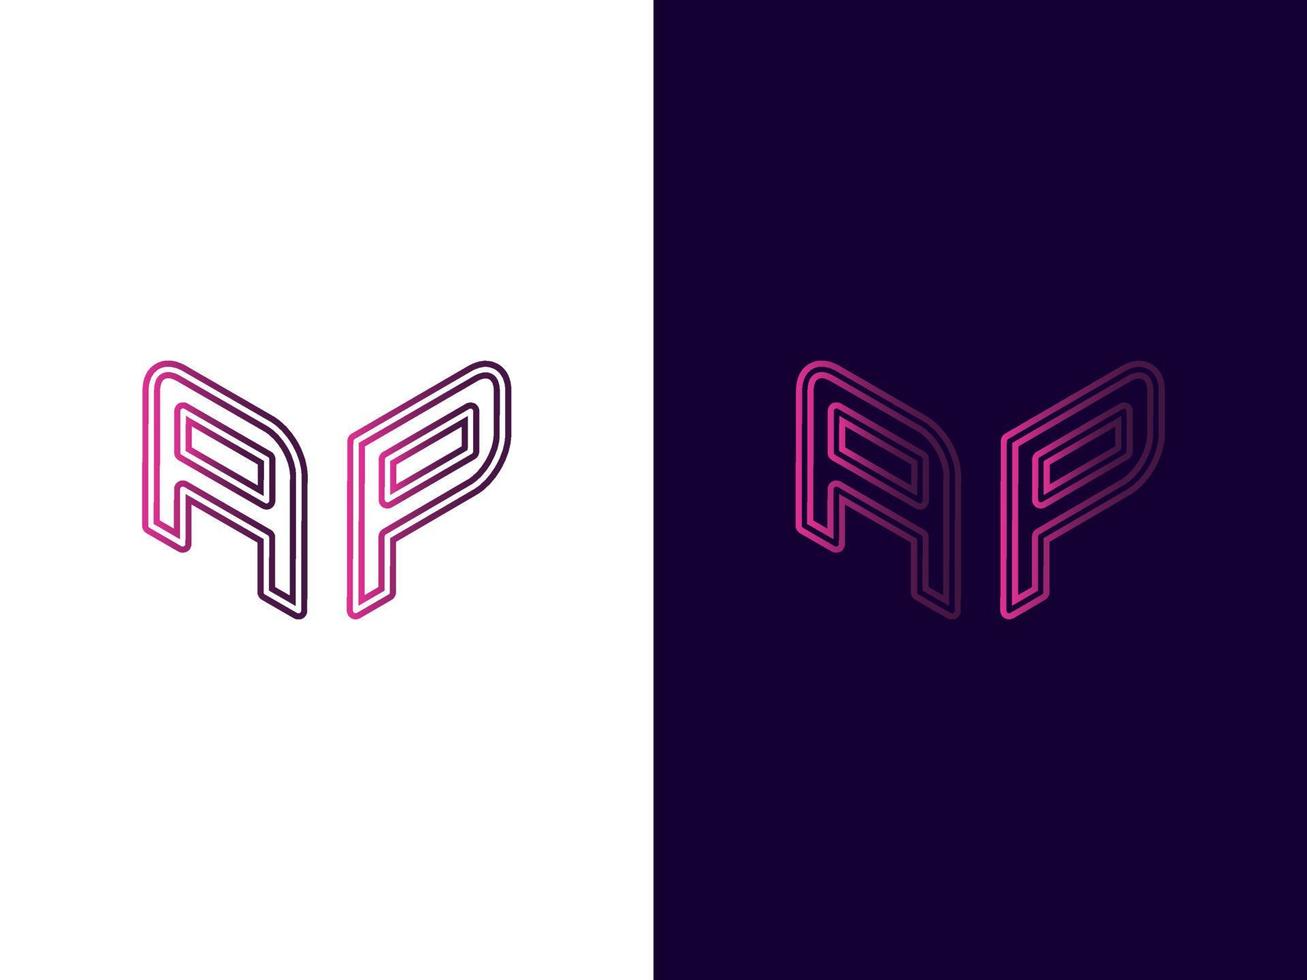 Initial letter AP minimalist and modern 3D logo design vector